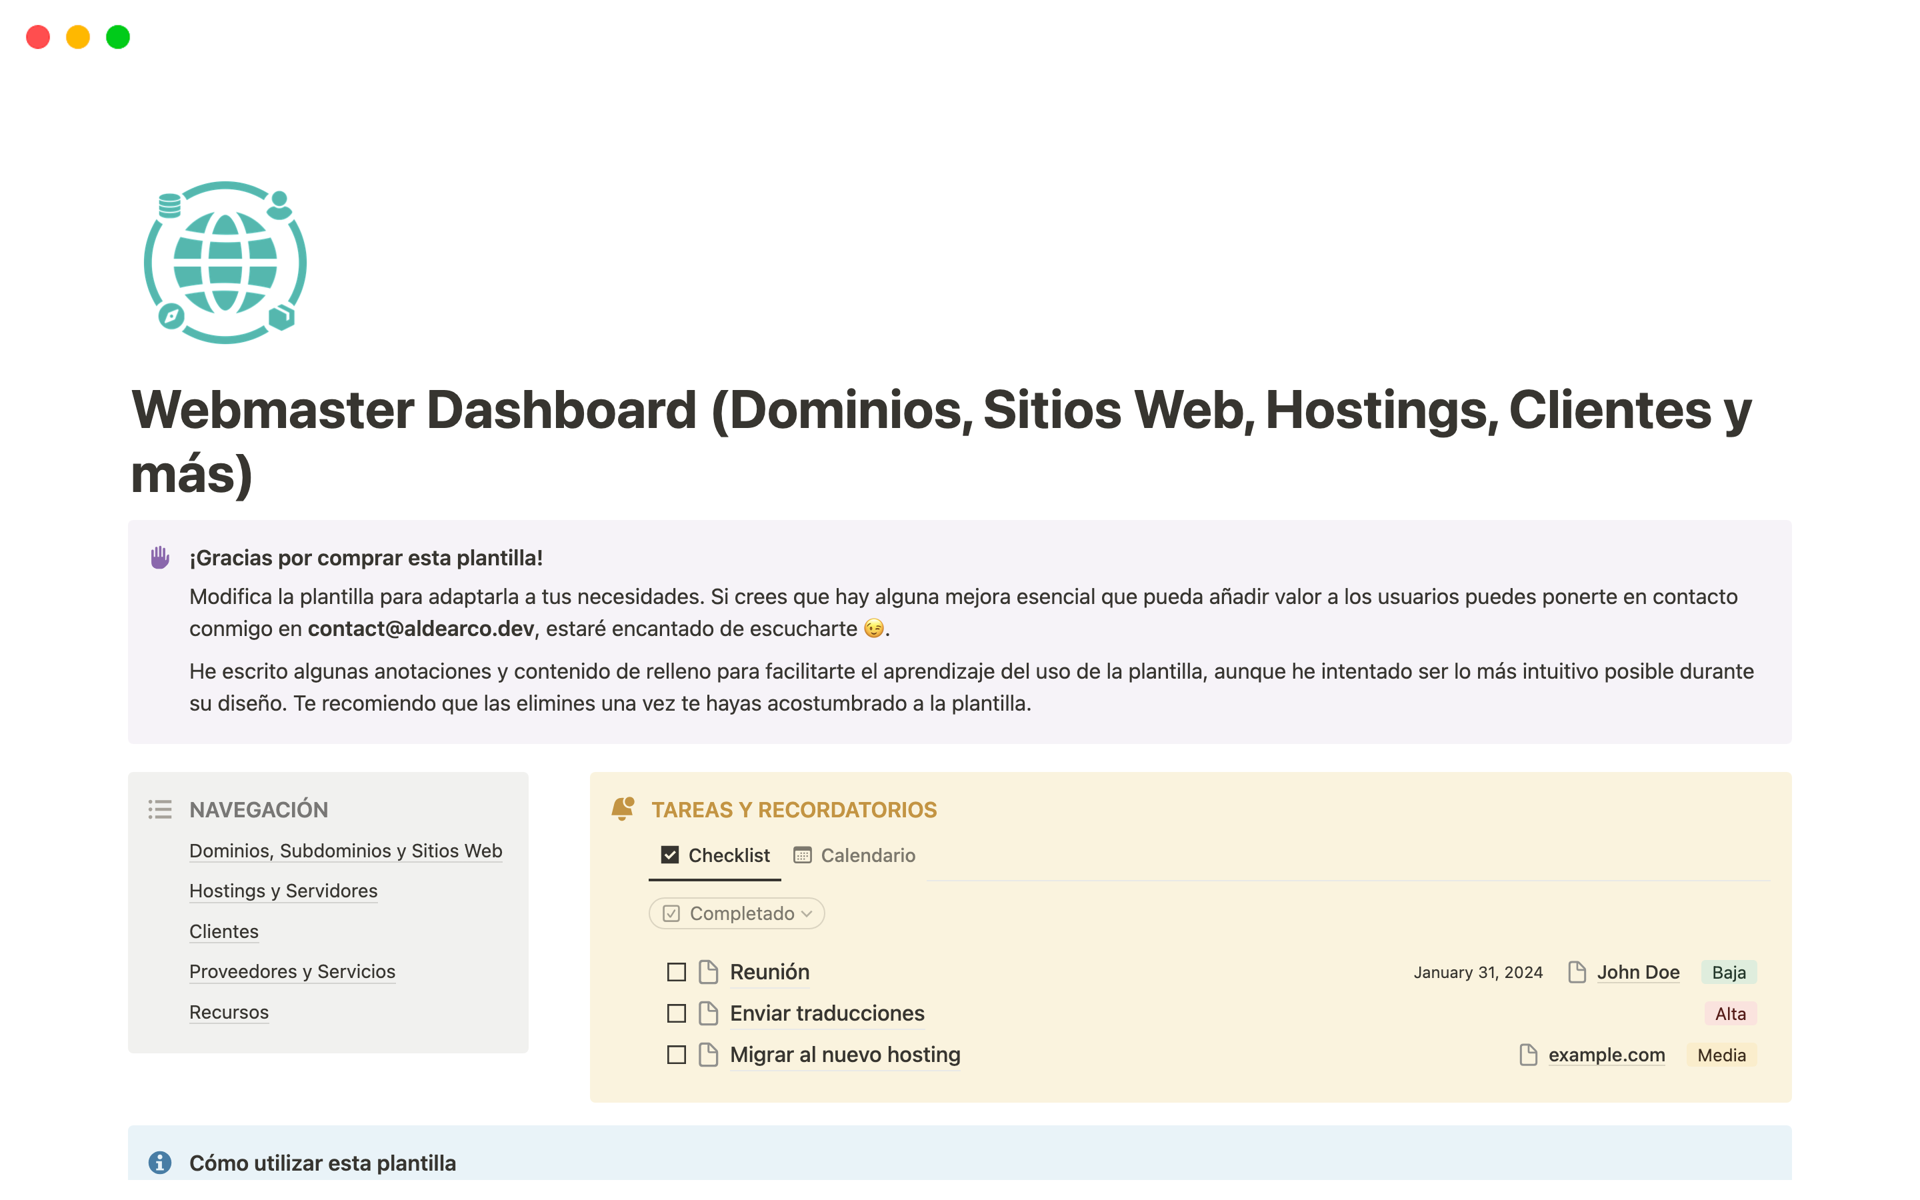 Aperçu du modèle de Webmaster Dashboard (Dominios, Webs, Hostings)